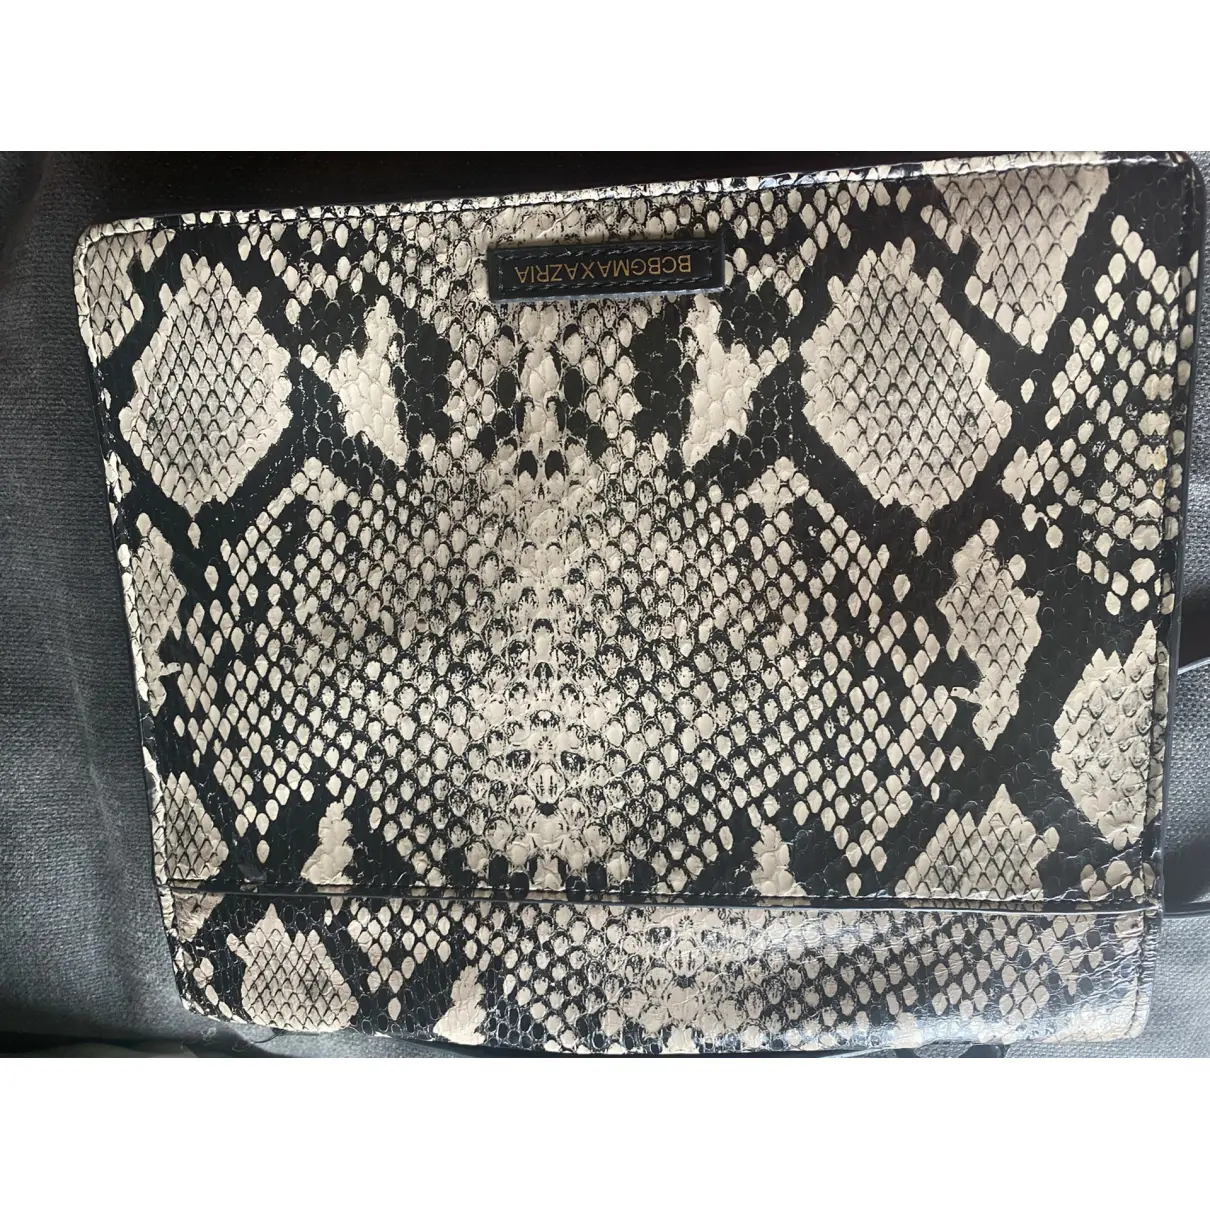 Luxury Bcbg Max Azria Handbags Women